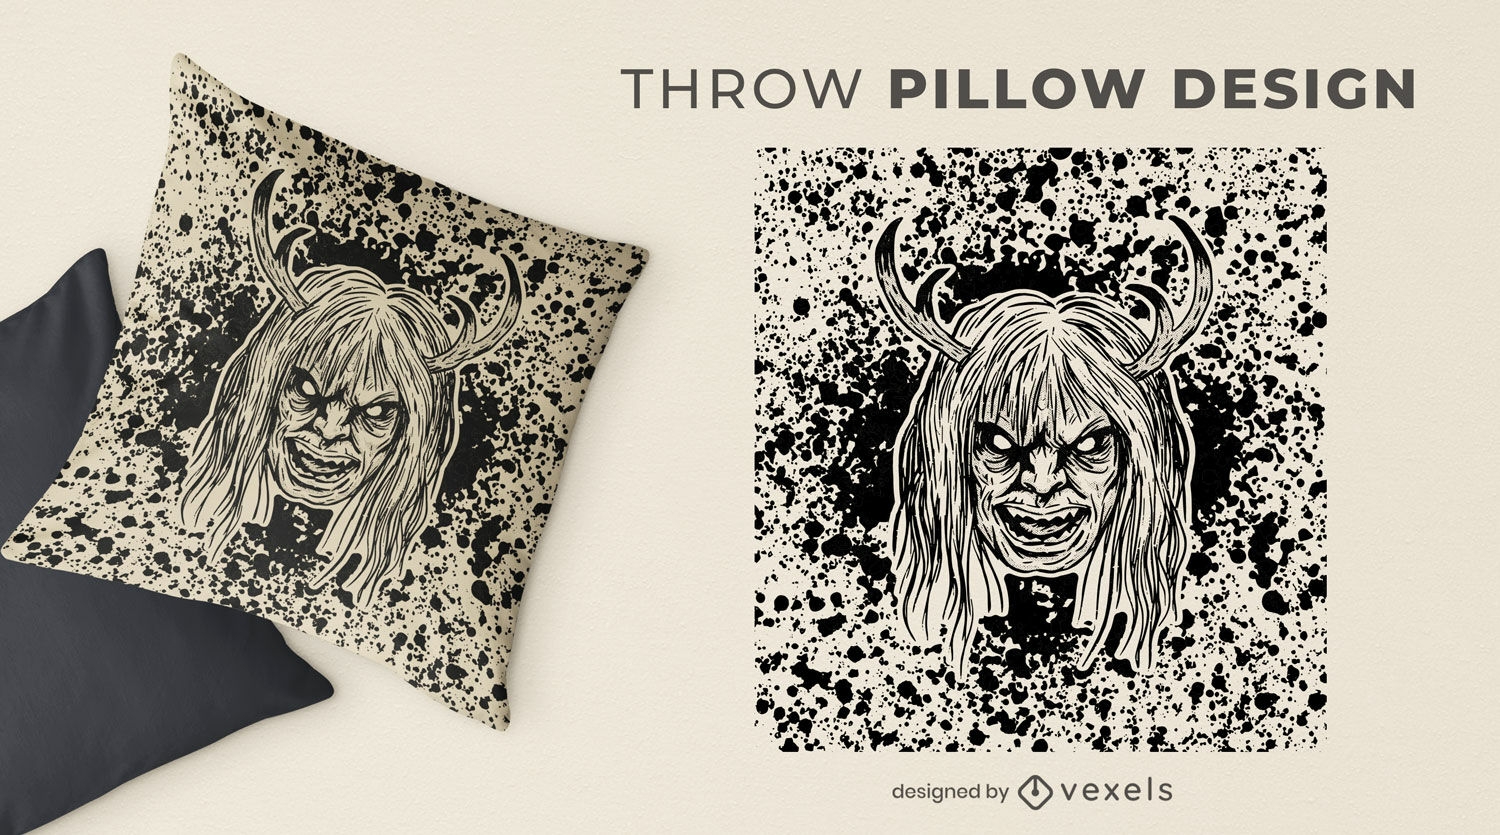 Diseño de almohada de tiro de monstruo zombie de mujer